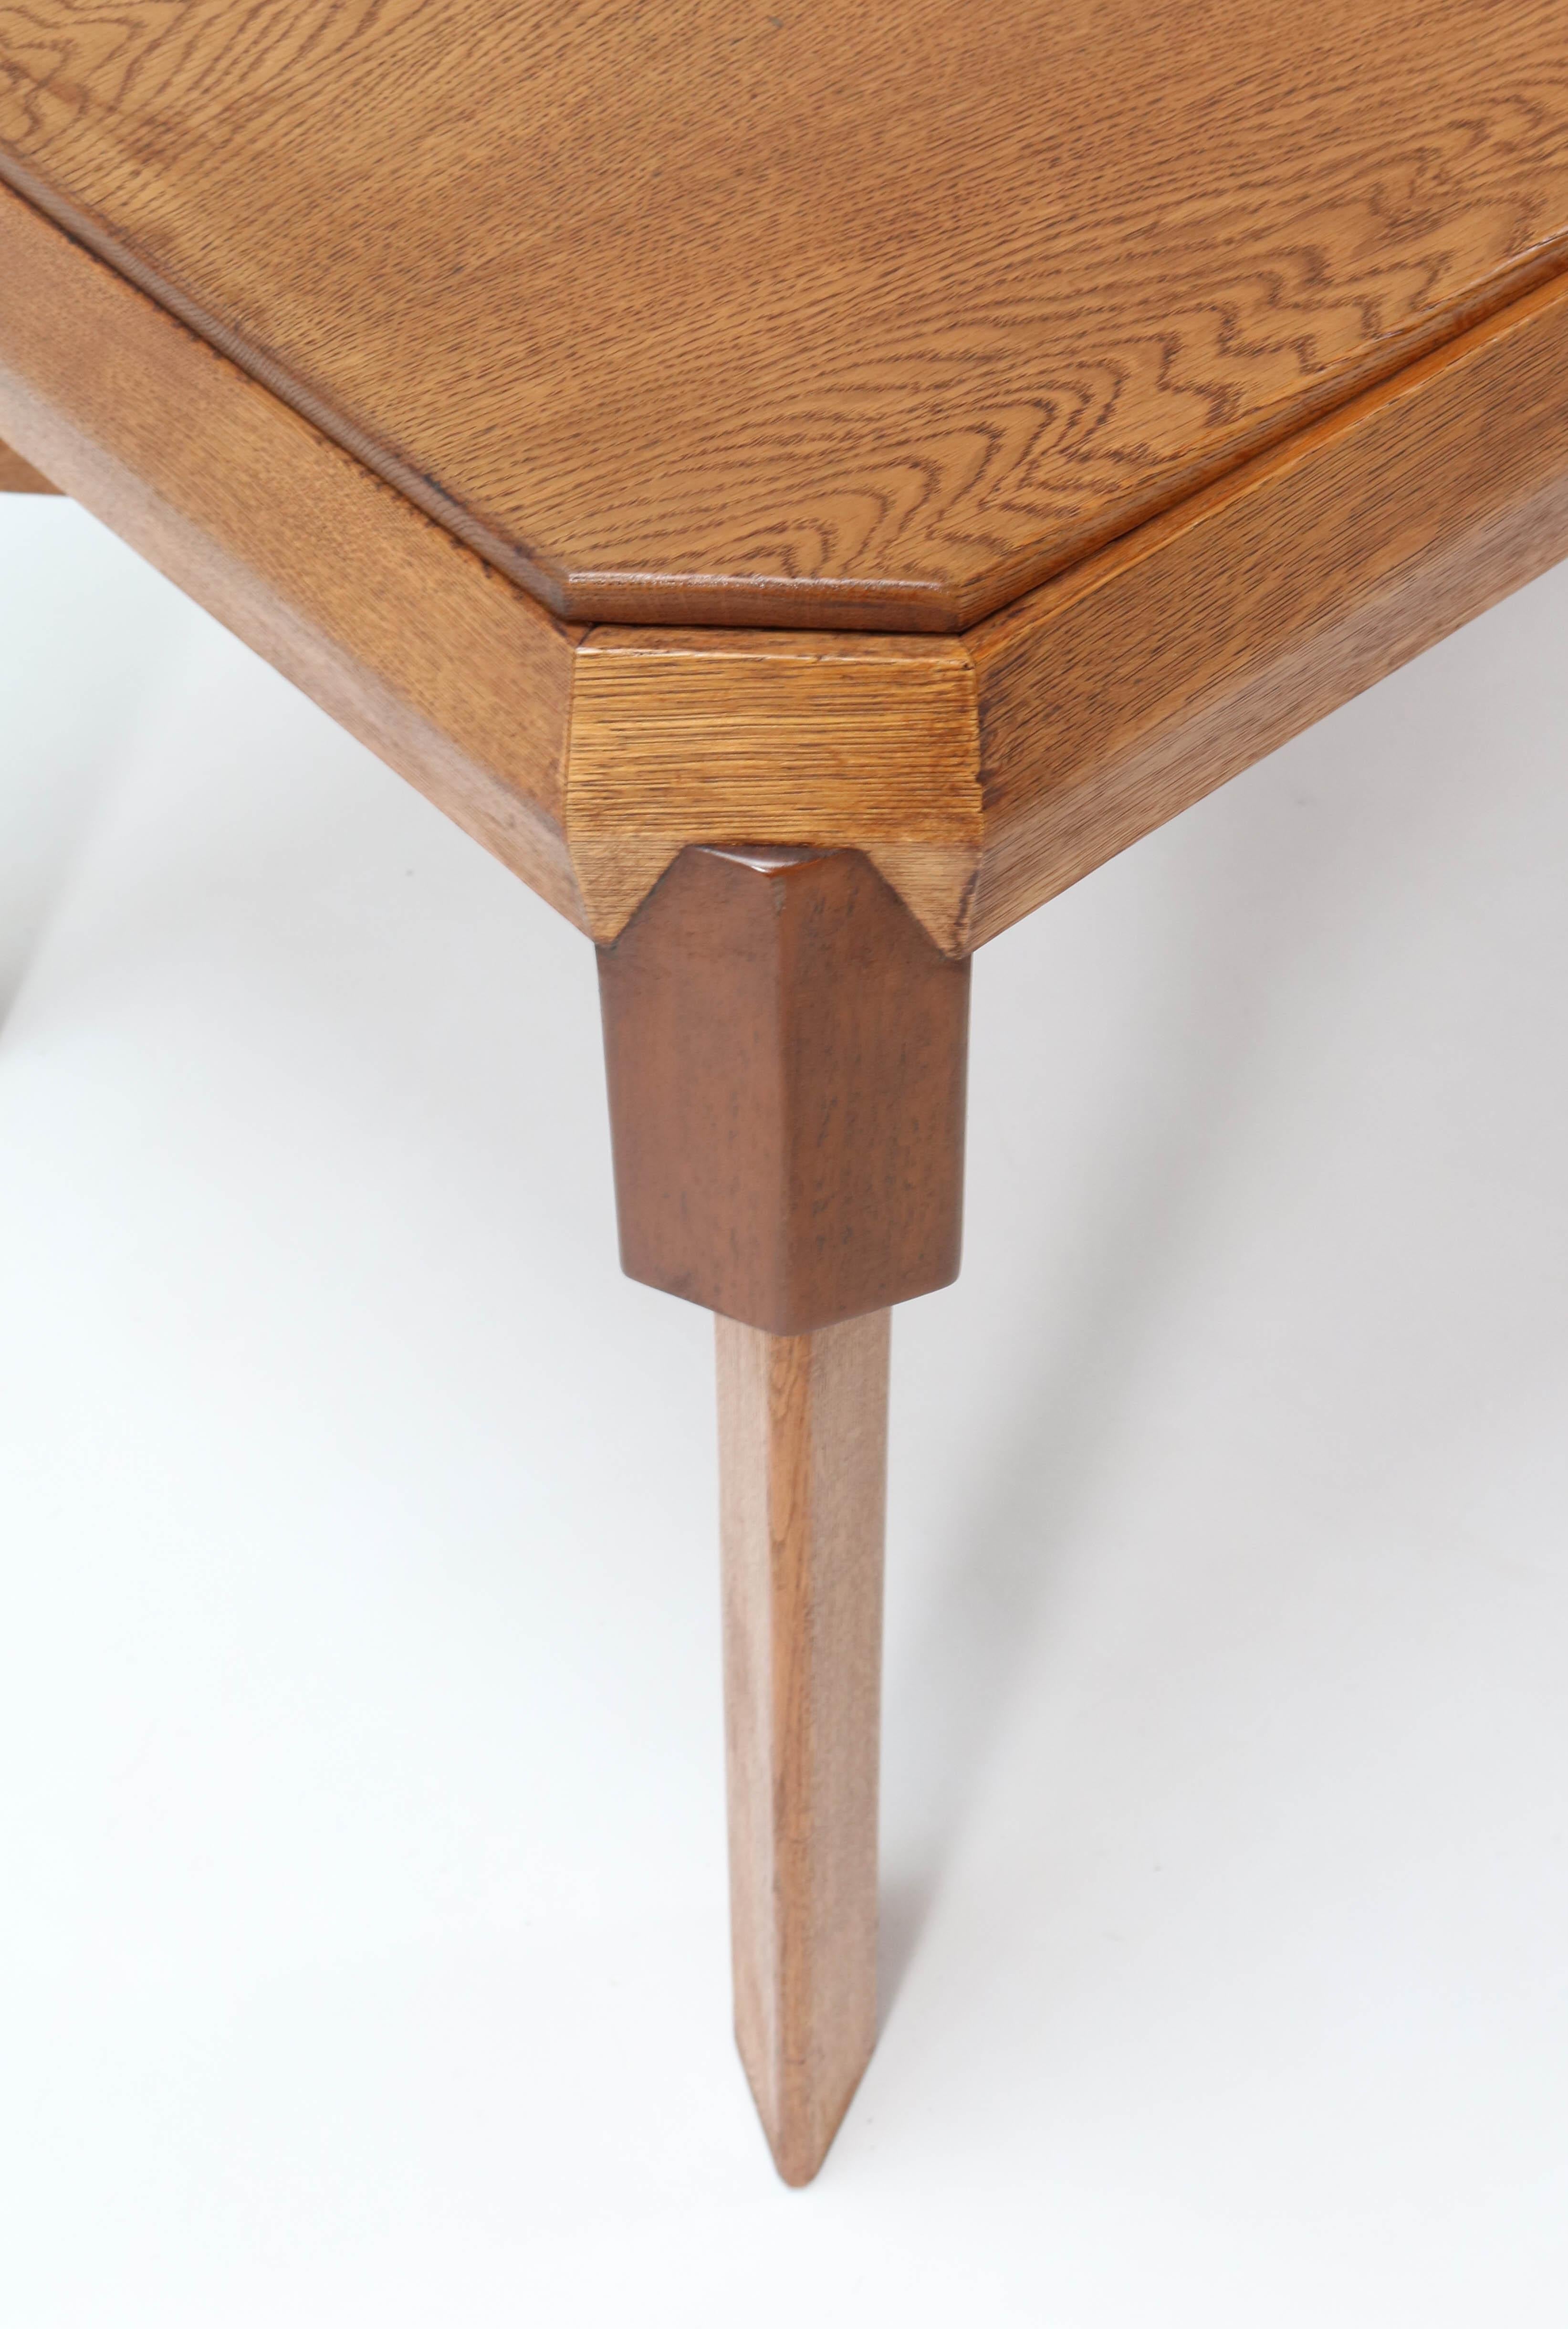 Oak Art Deco Amsterdamse School Table or Writing Table by Willem Retera Wzn 5